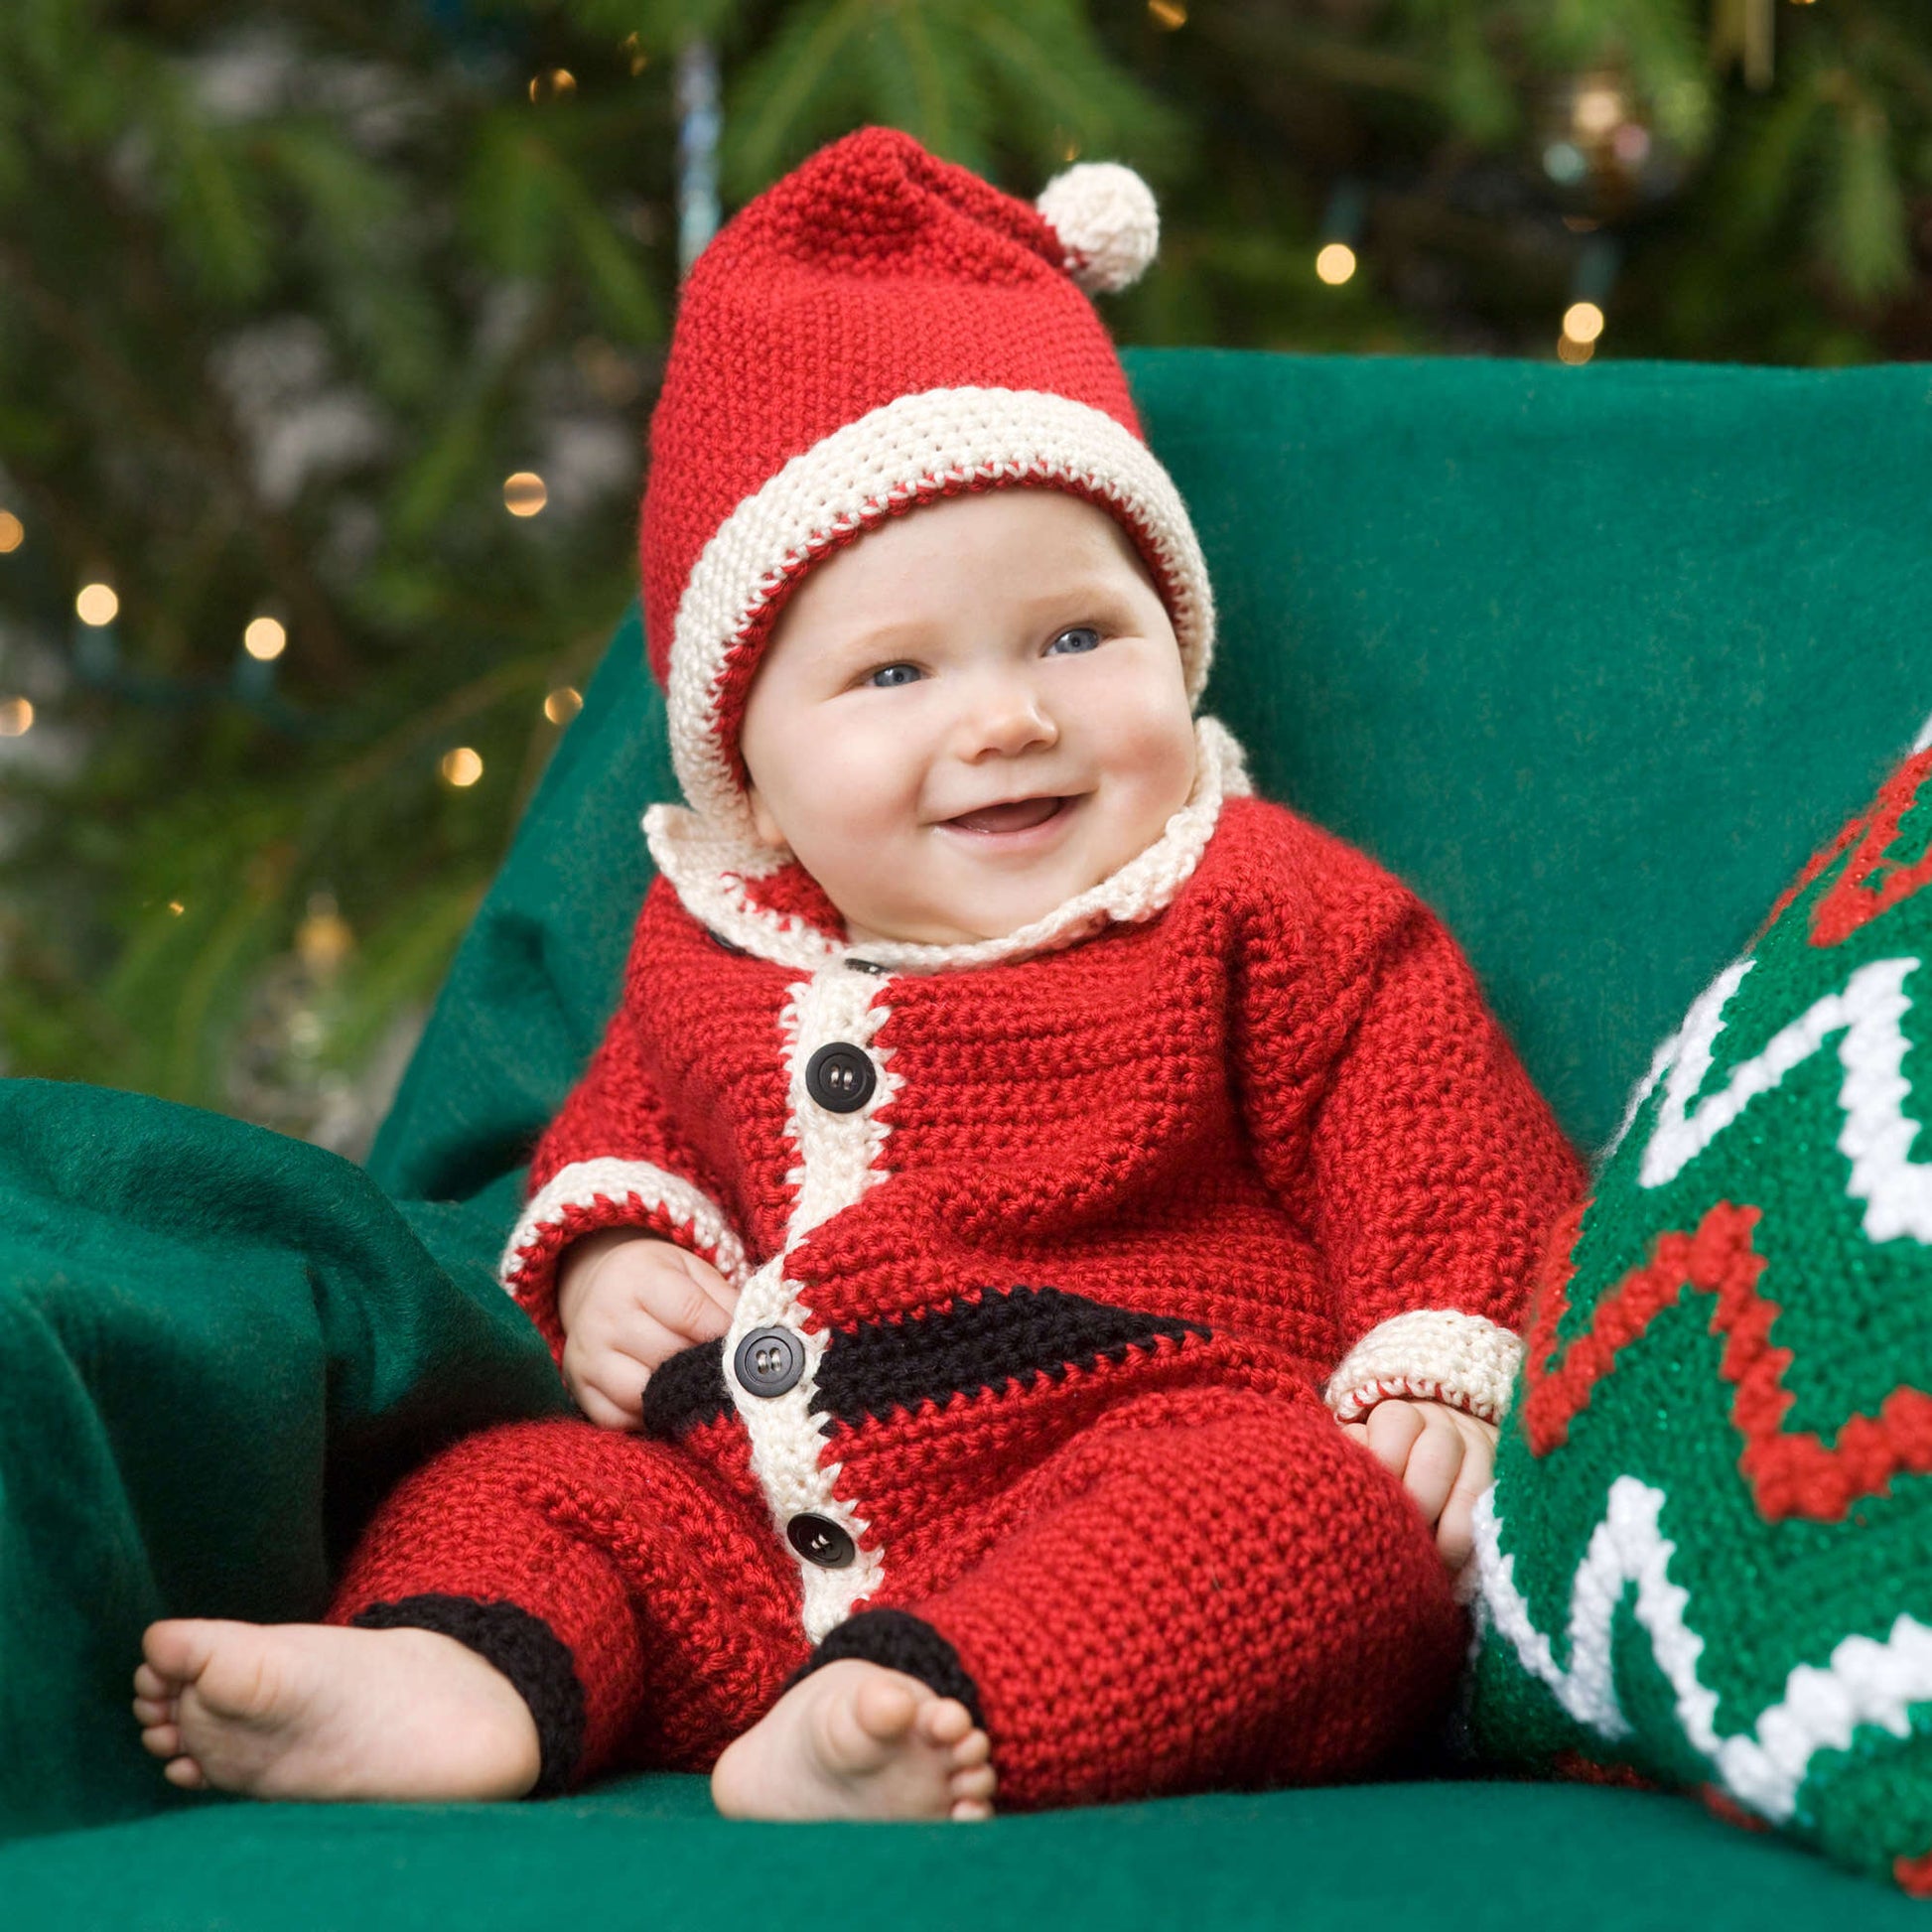 Free Red Heart Infant Santa Suit & Hat Crochet Pattern